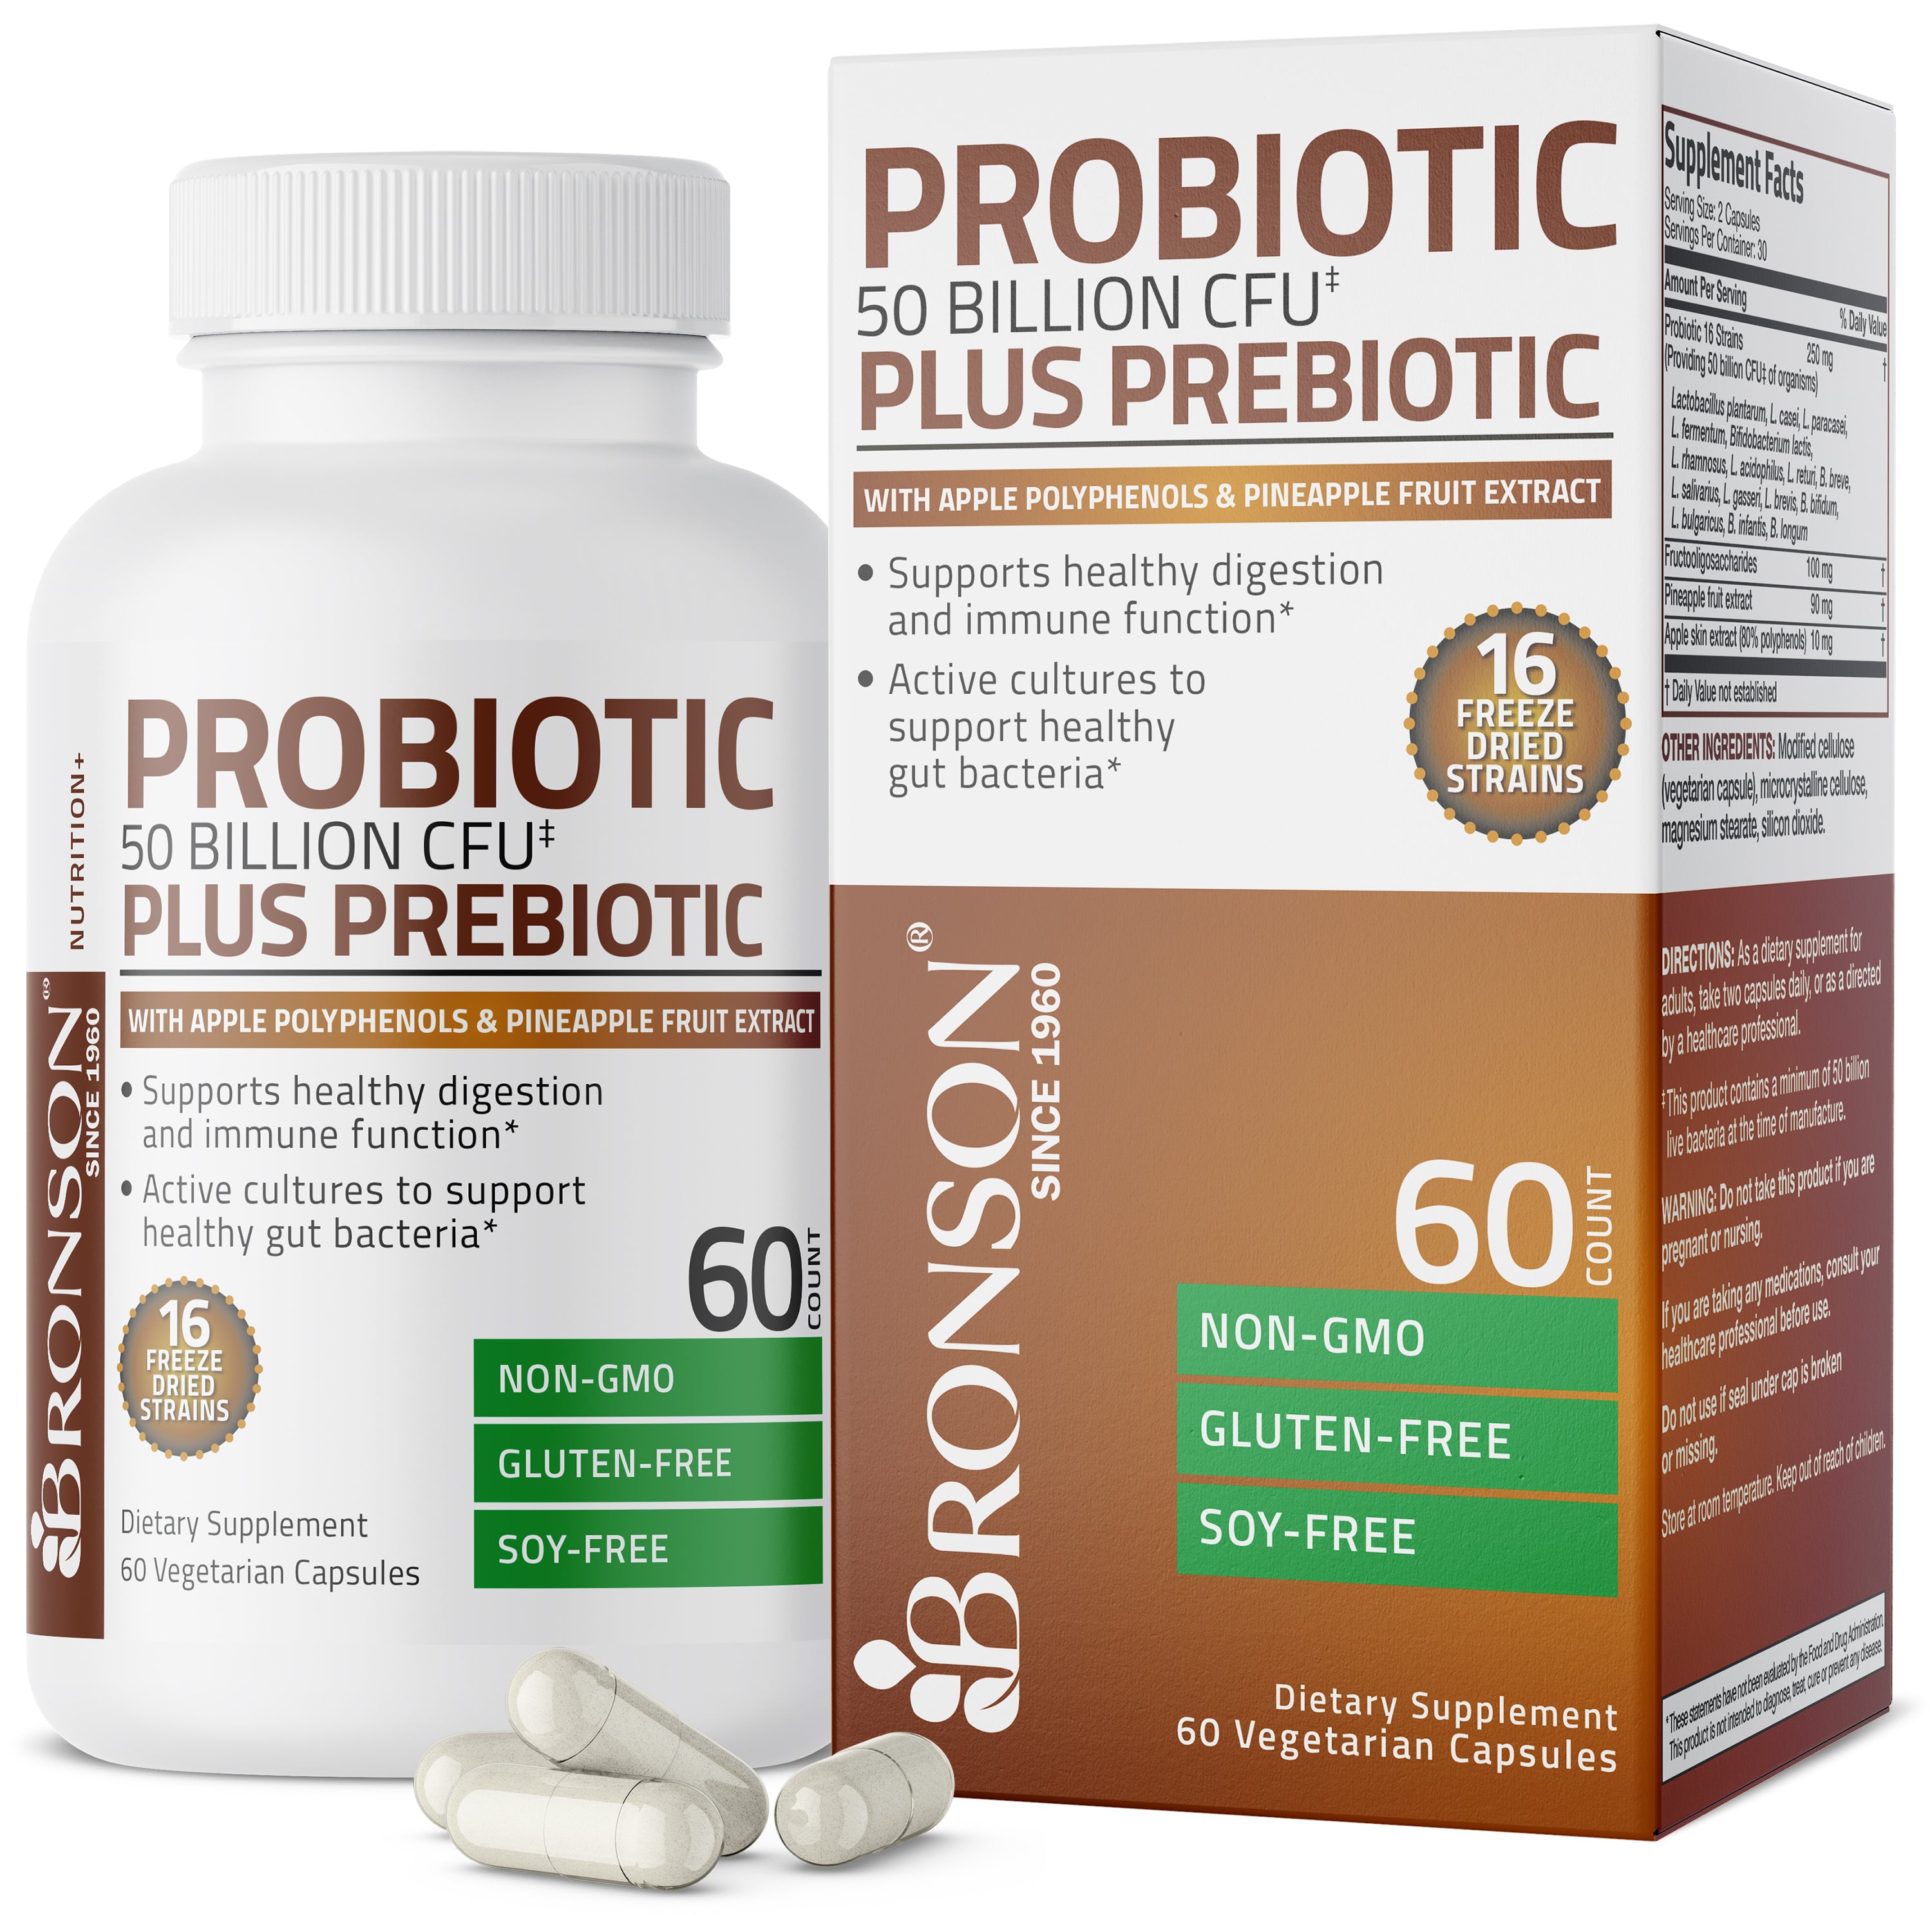 Probiotic Plus Prebiotic - 50 Billion CFU - 60 Vegetarian Capsules view 1 of 7